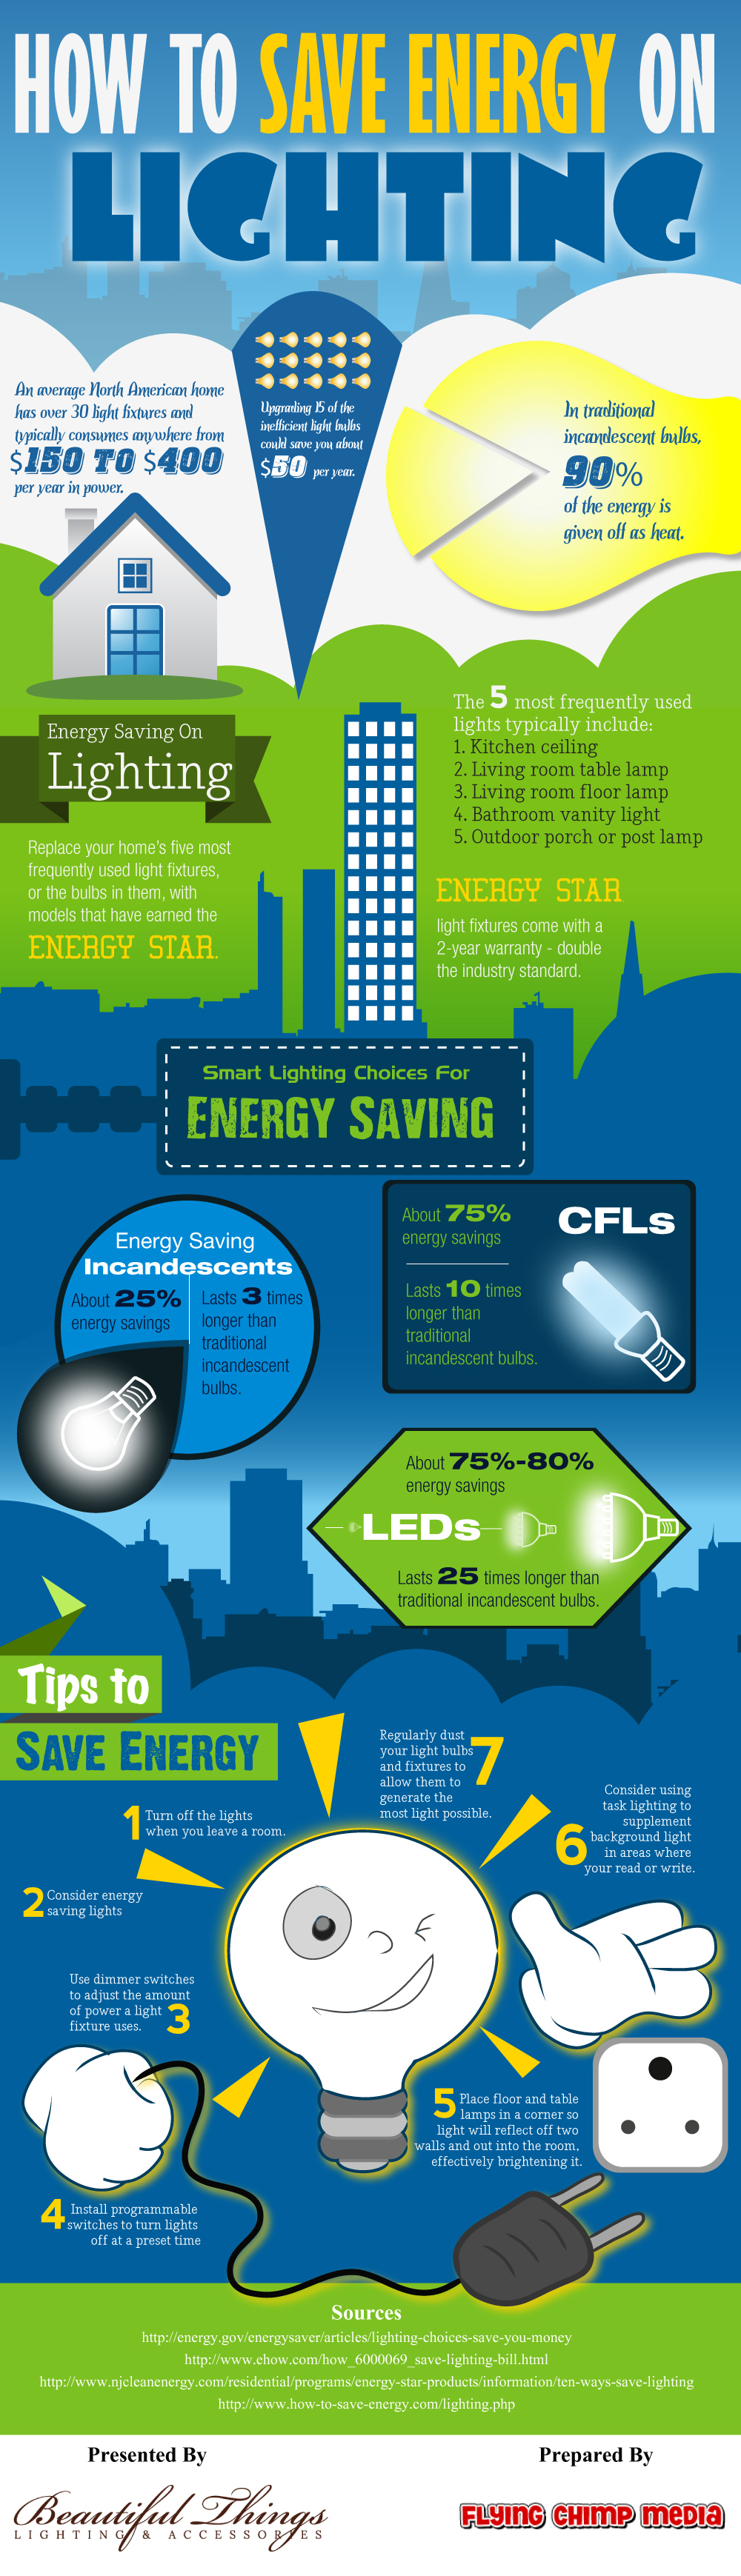 How To Save Energy On Lighting